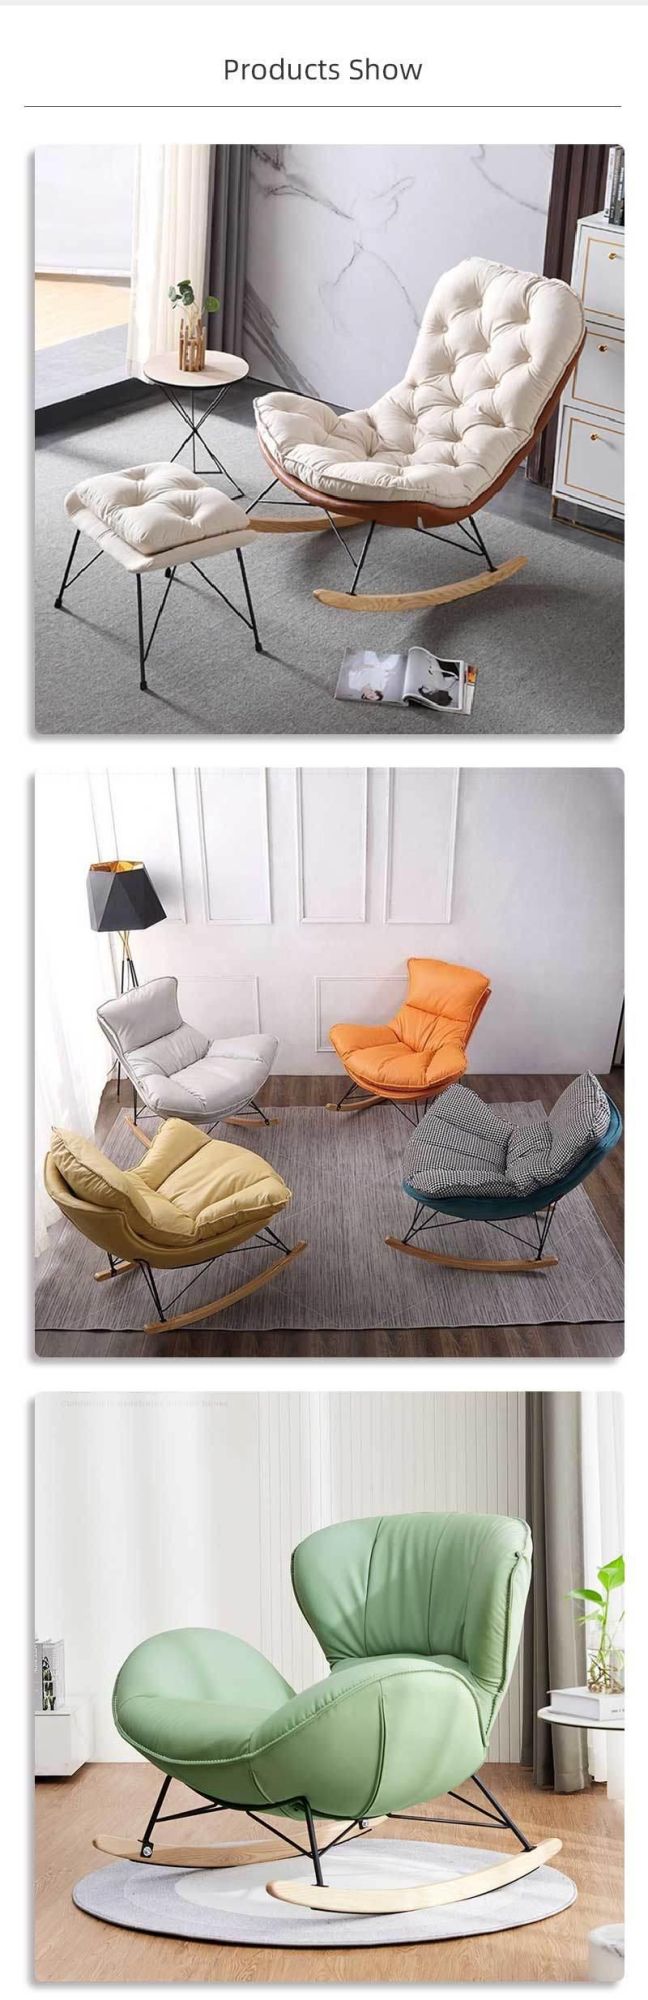 Outdoor Furniture Garden Living Room Leisure Sofa Outdoor Rocking Chair